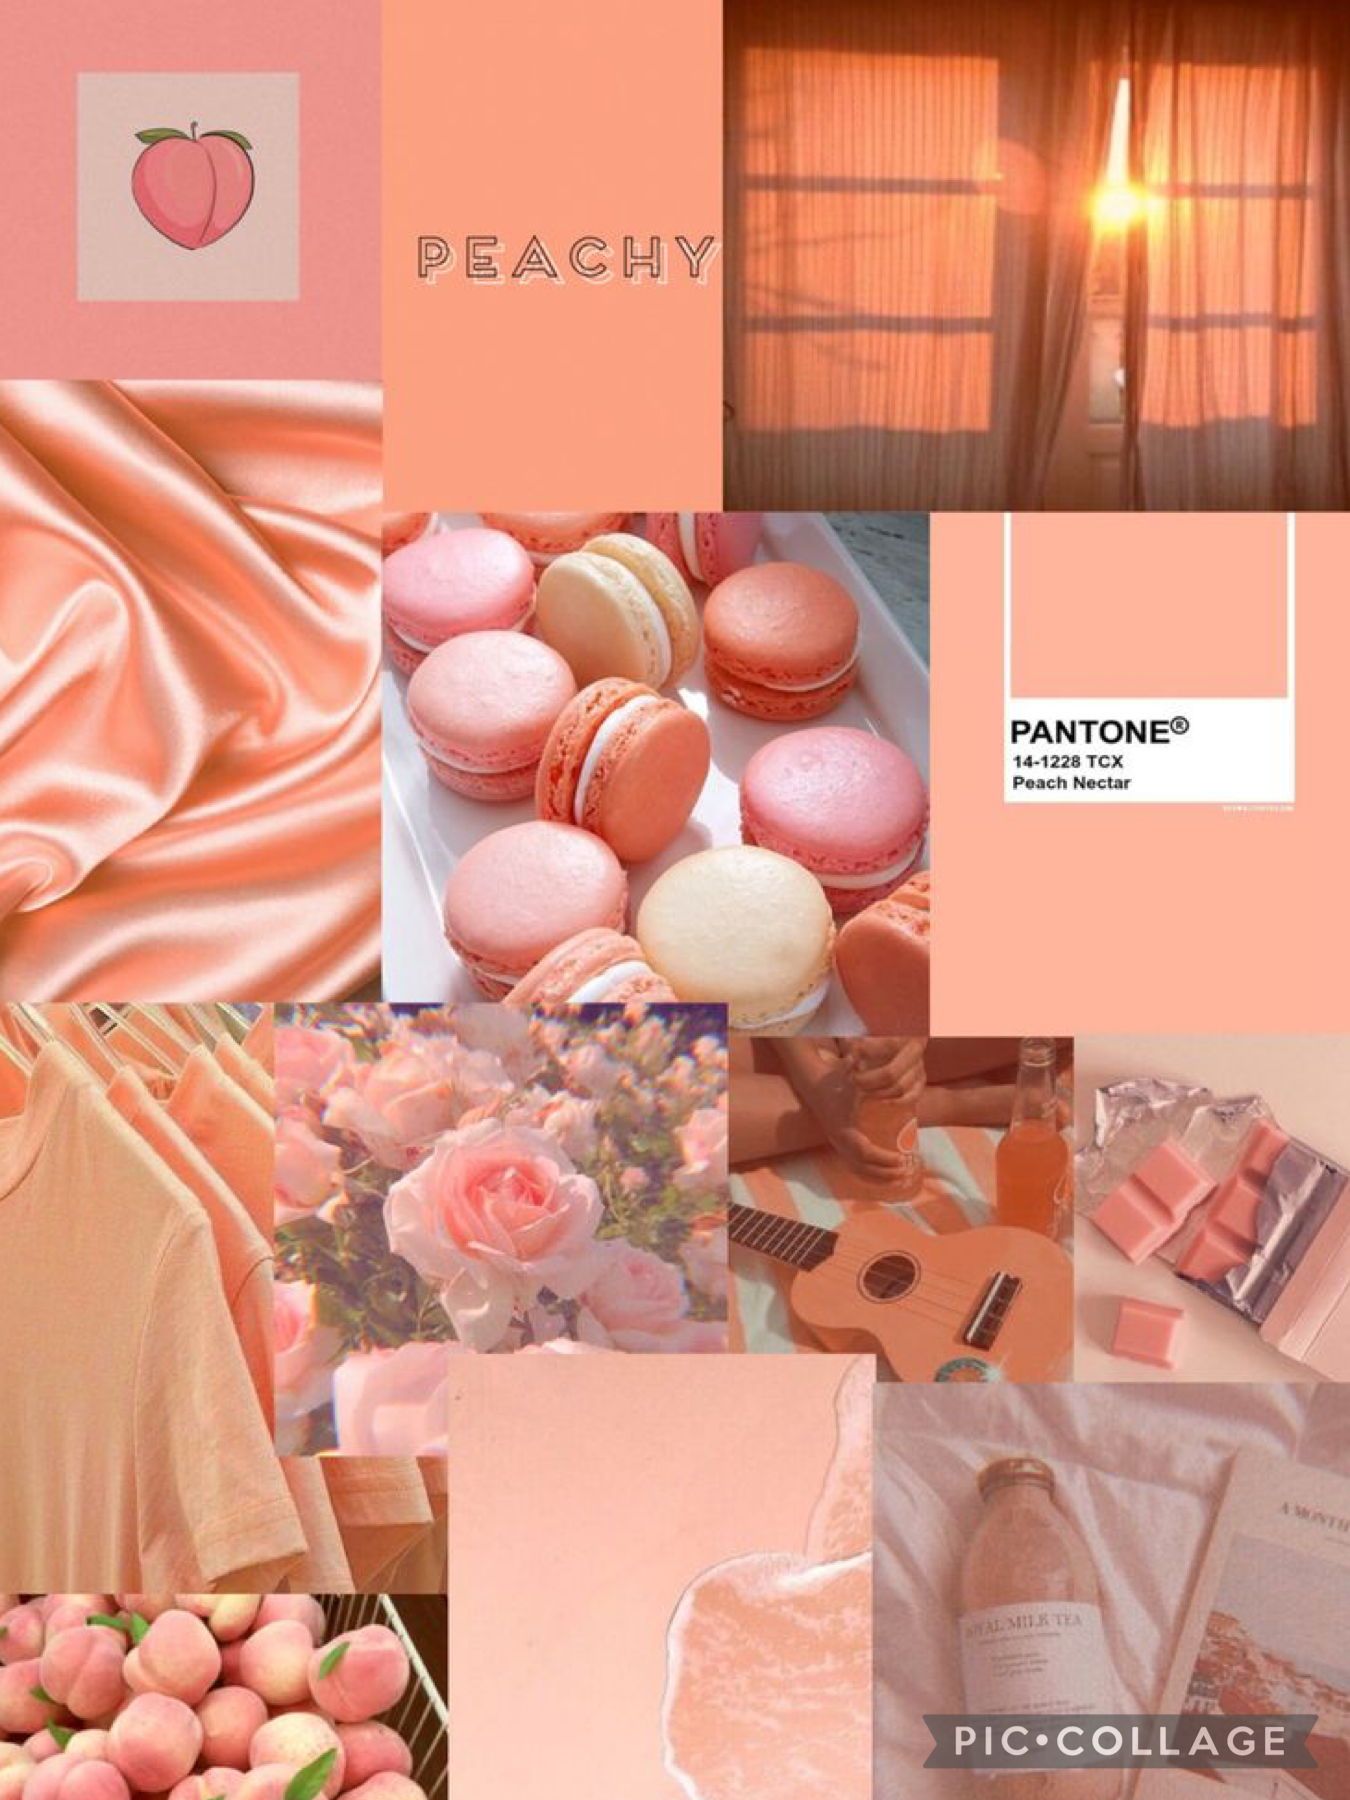 Peachy aesthetic